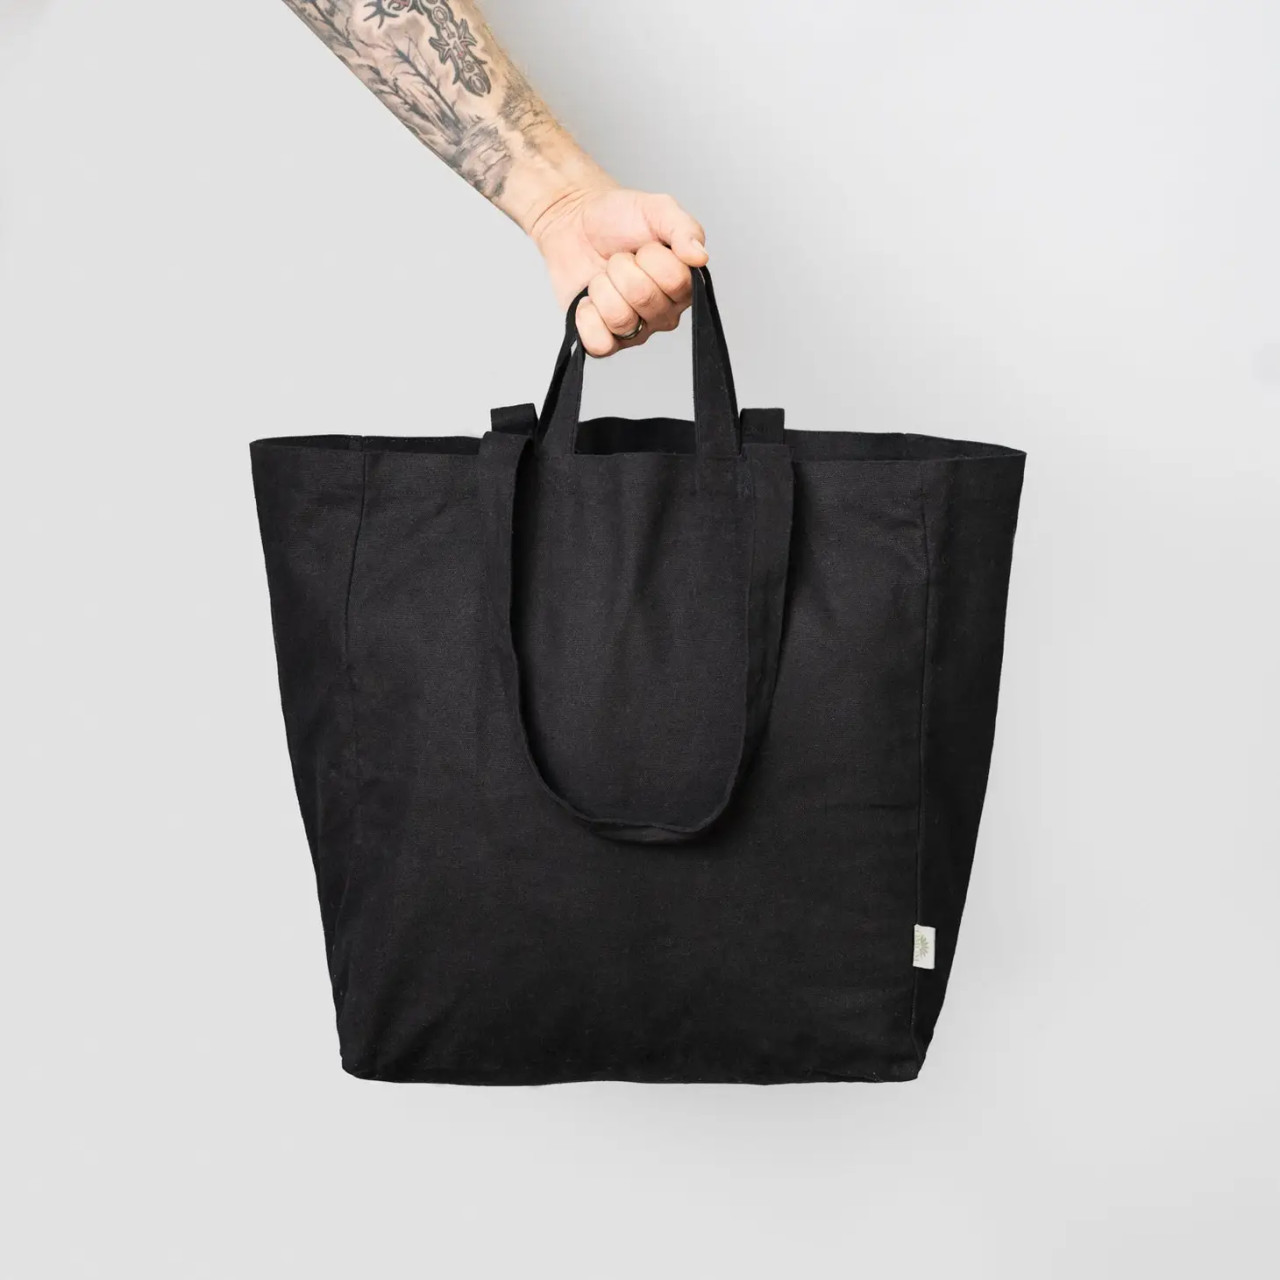 Black Organic Box Tote Bag - THE BEACH PLUM COMPANY